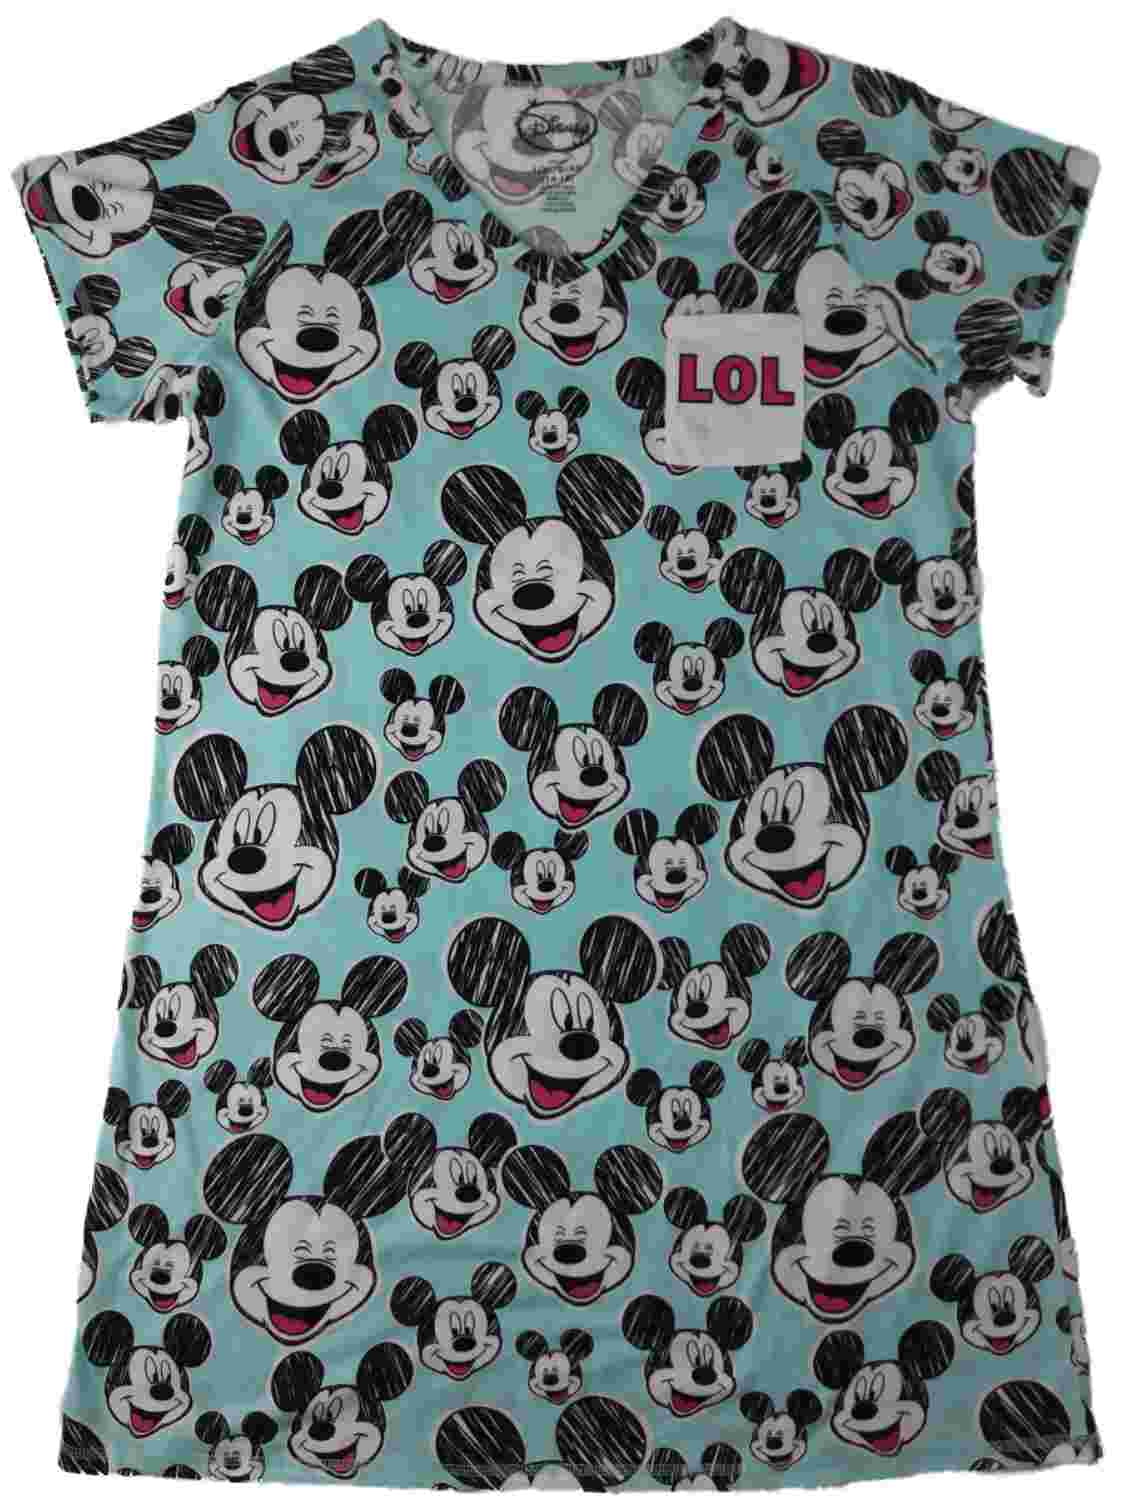 Disney Mickey and Minnie Mouse Night Sleep Tee Shirt